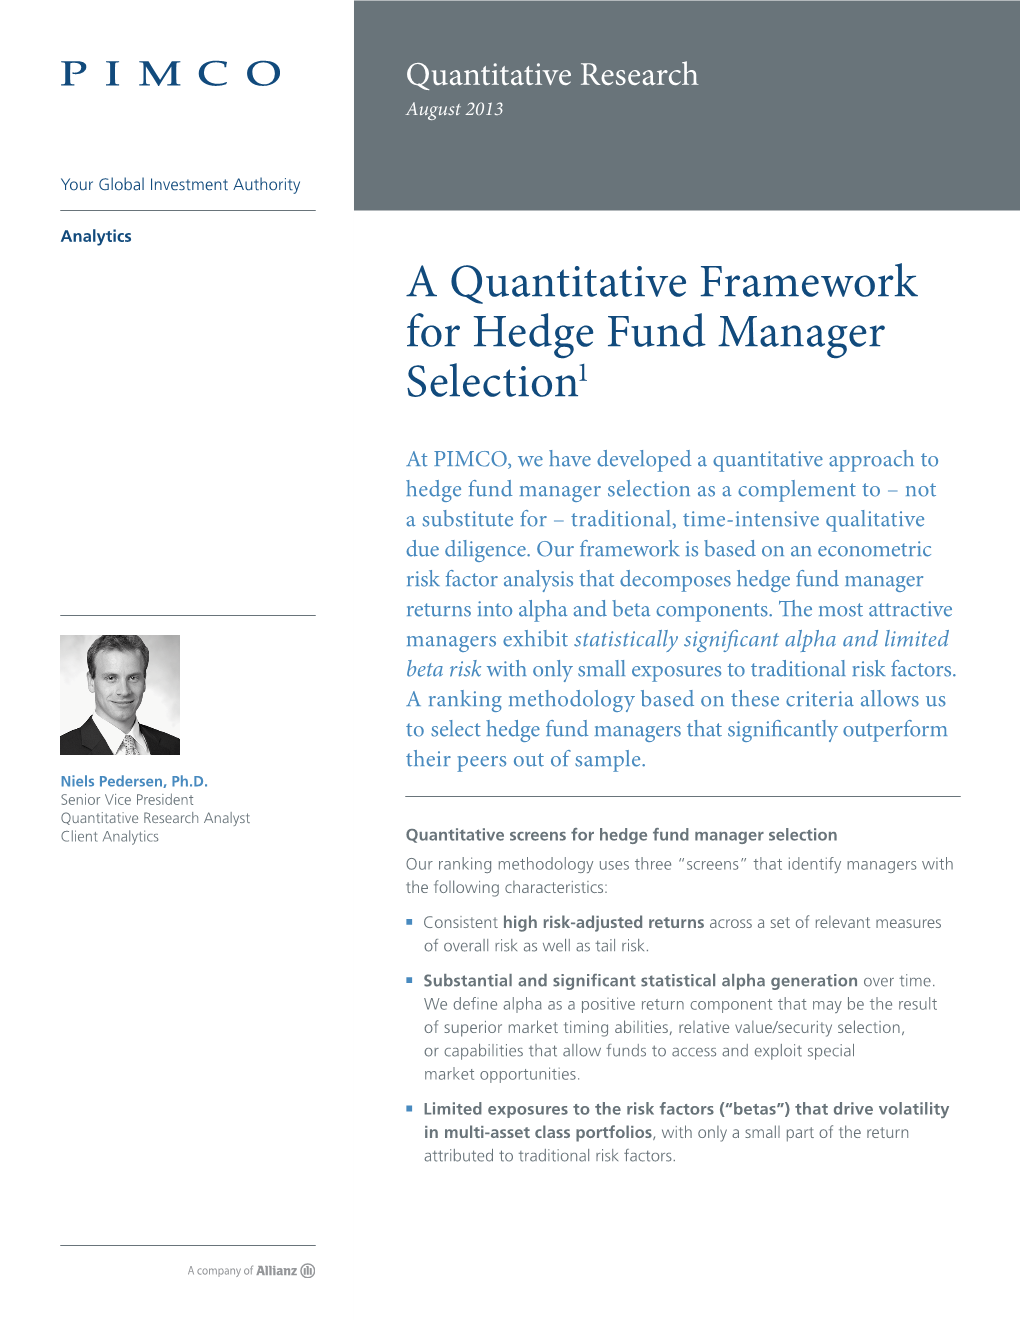 A Quantitative Framework for Hedge Fund Manager Selection1